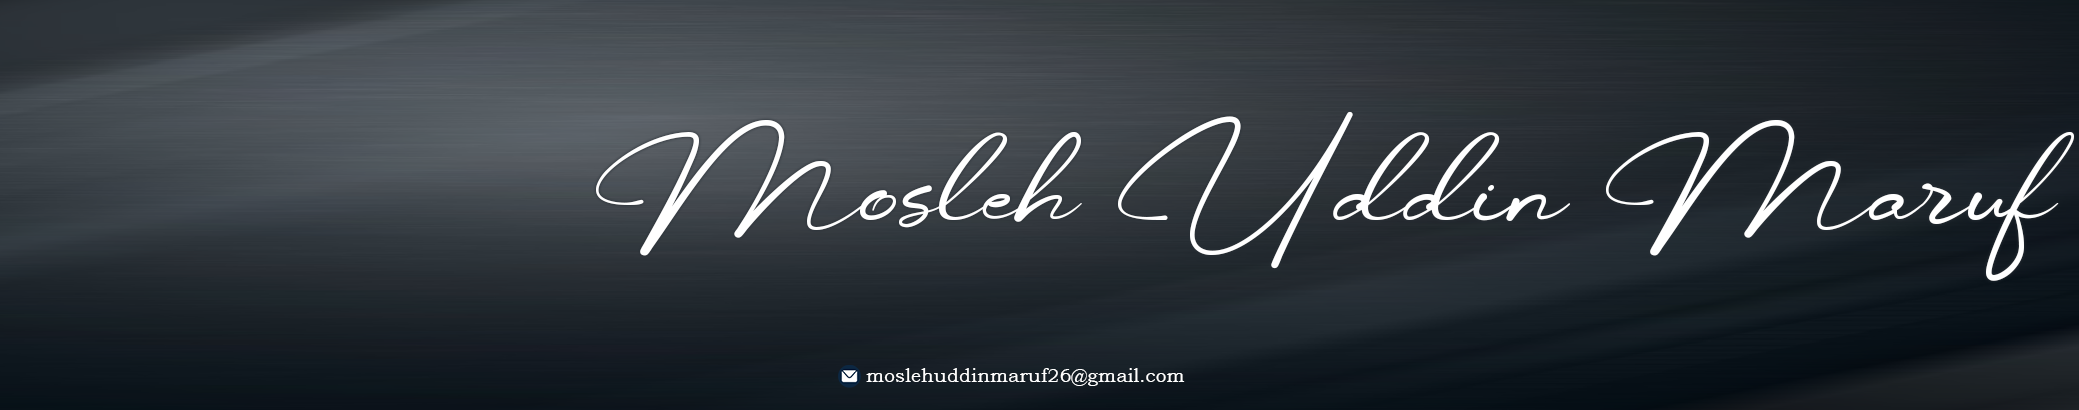 Mosleh uddin Maruf26's profile banner